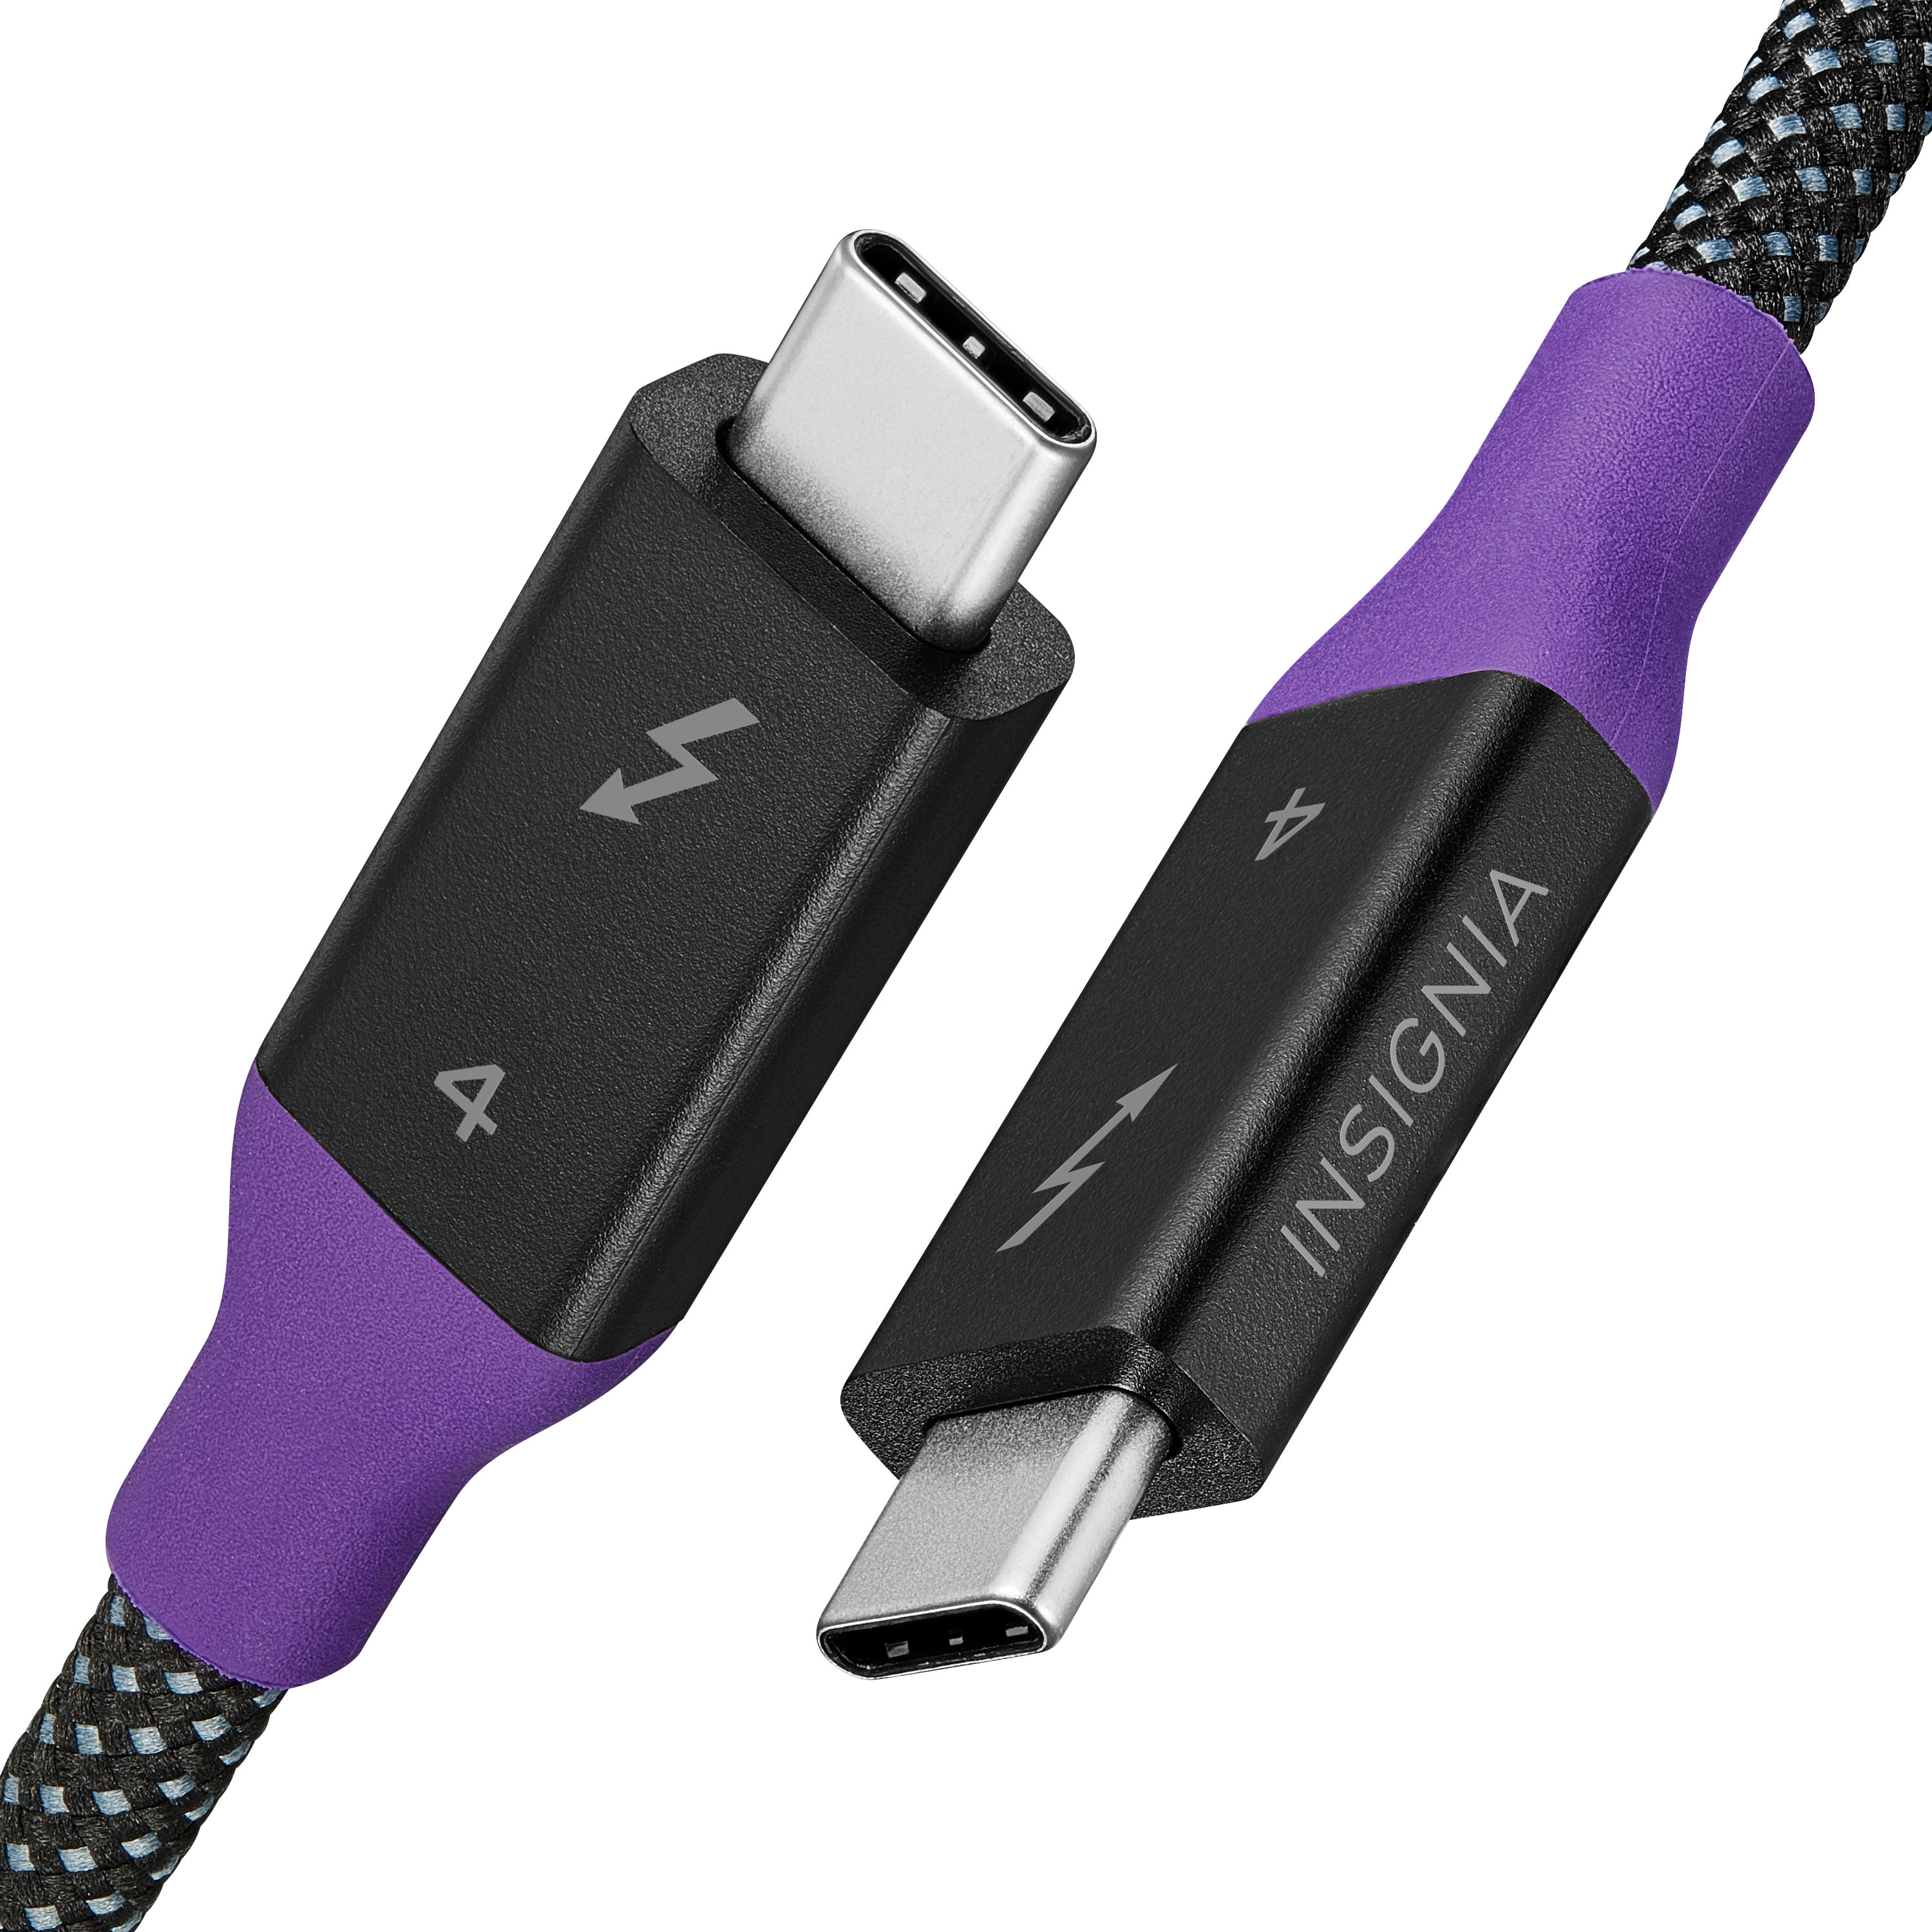 40Gbps USB4 Thunderbolt 3 Cable (USB-C to USB-C) - EDIMAX